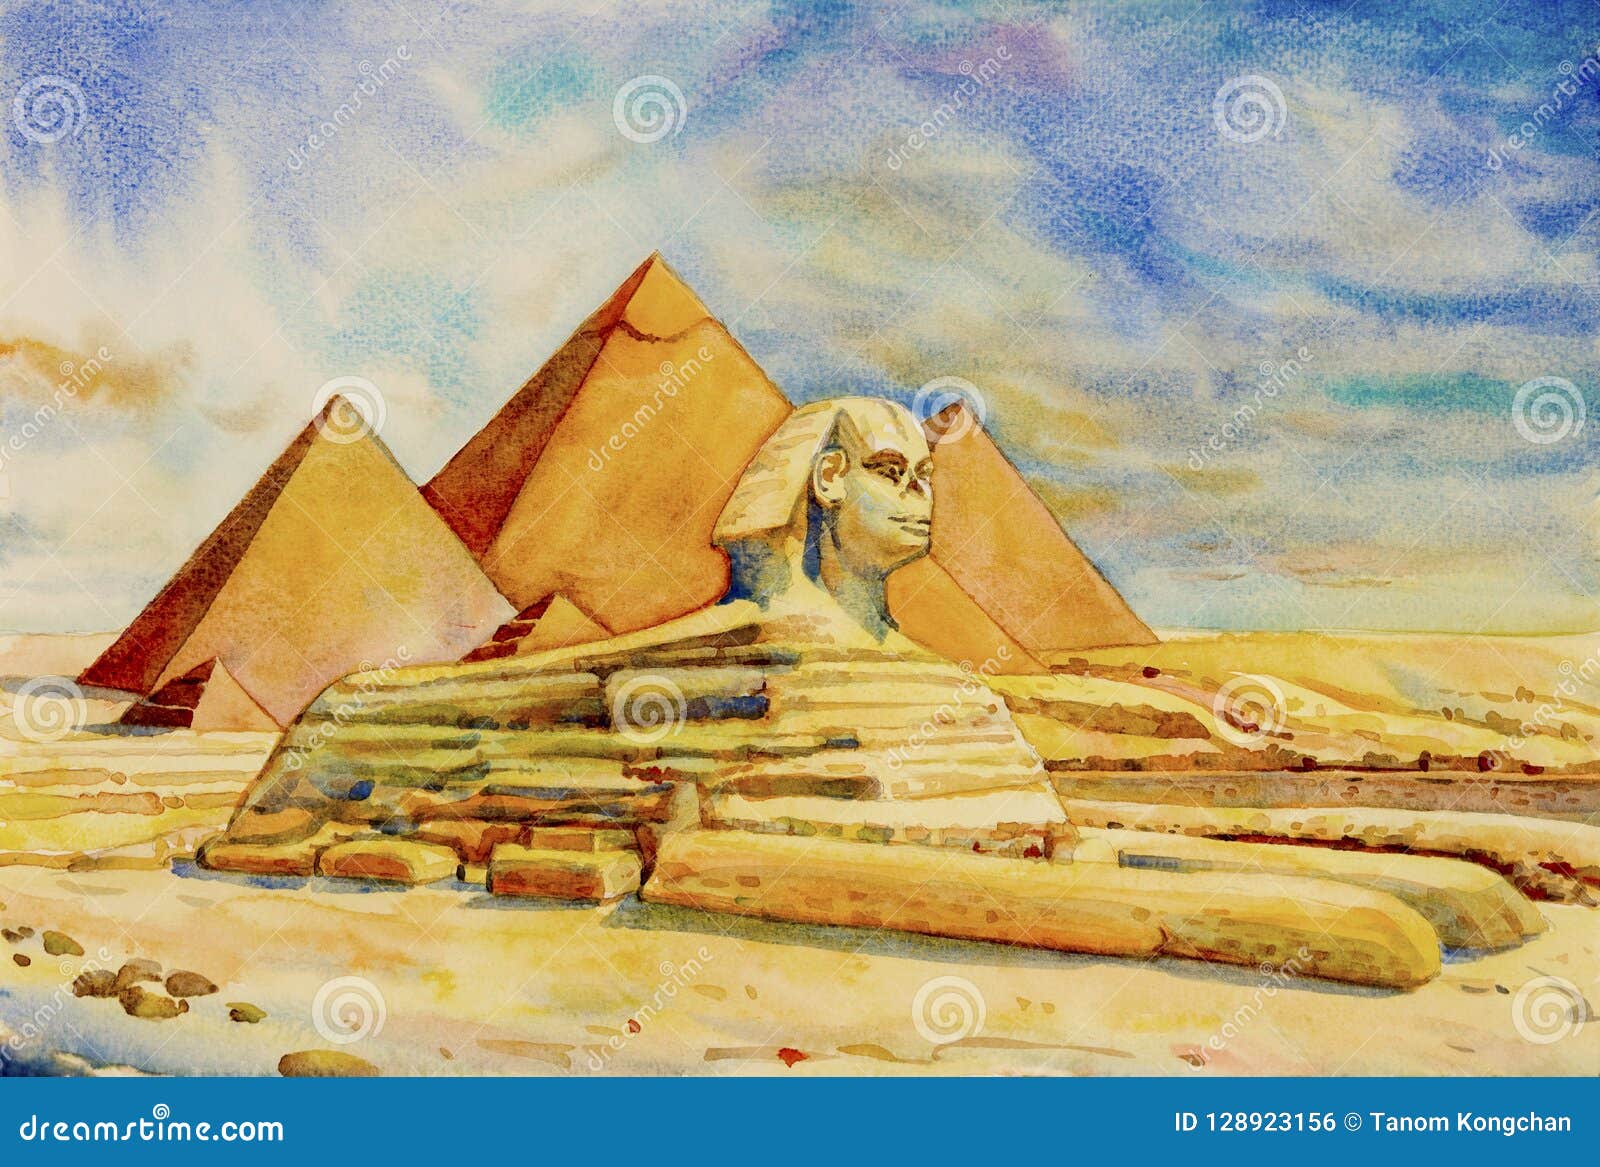 Great Pyramid Of Giza Painting